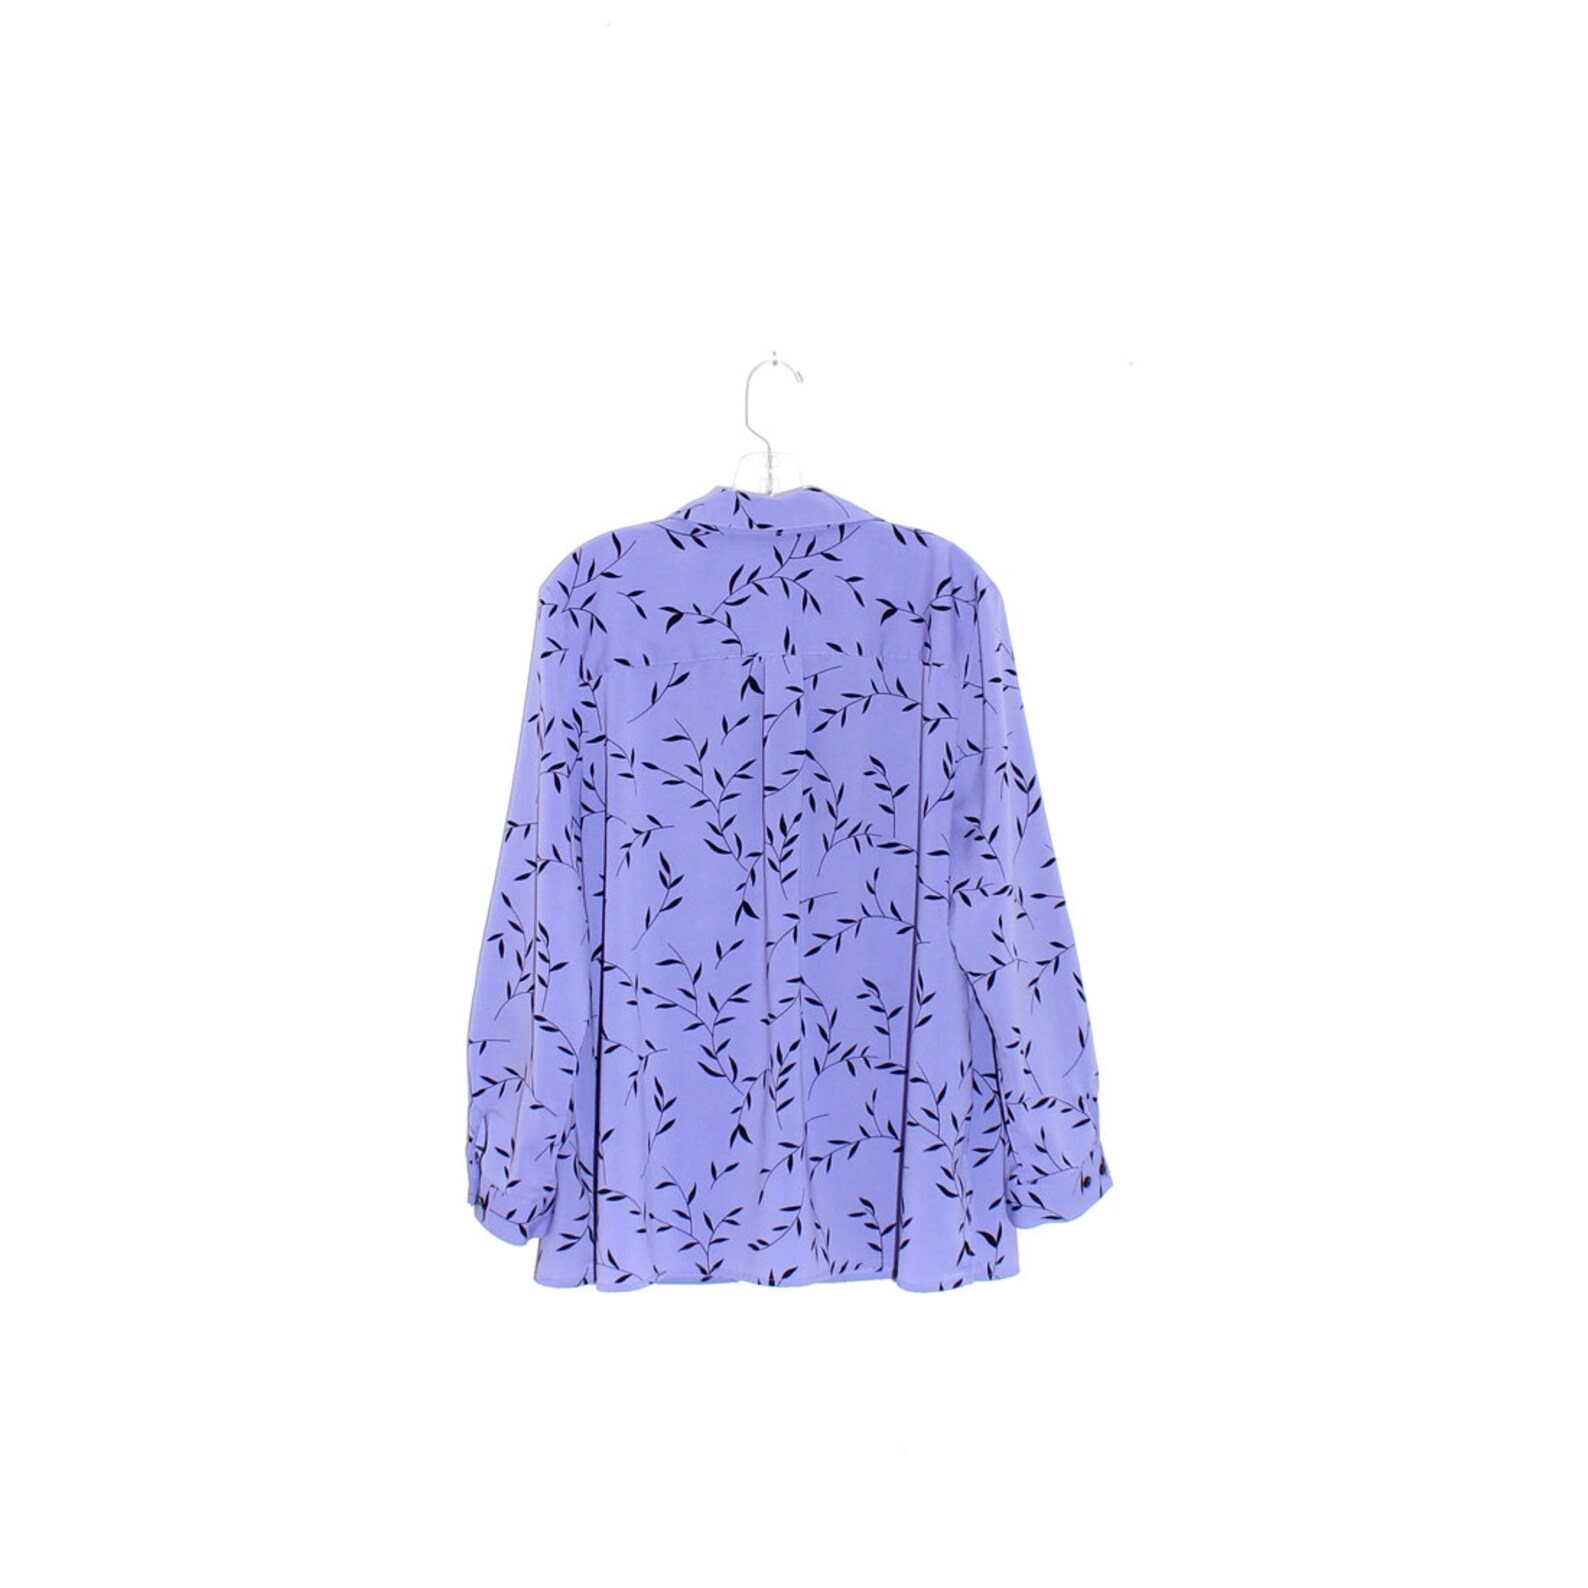 PURPLE OVERSIZED BLOUSE lilac lavender black leaf print shirt | Etsy